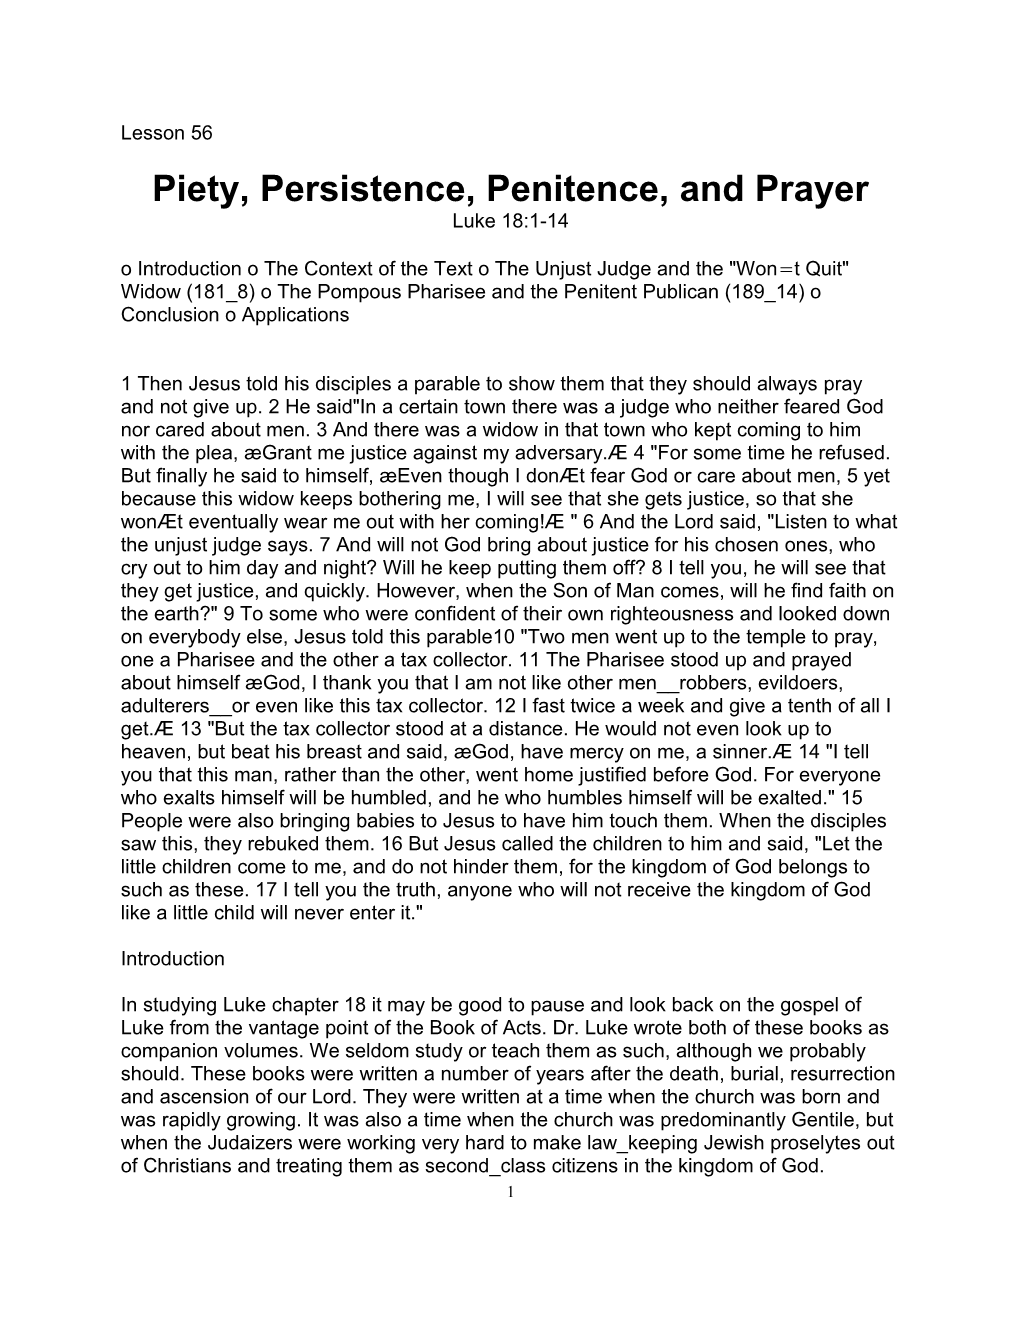 Piety, Persistence, Penitence, and Prayer